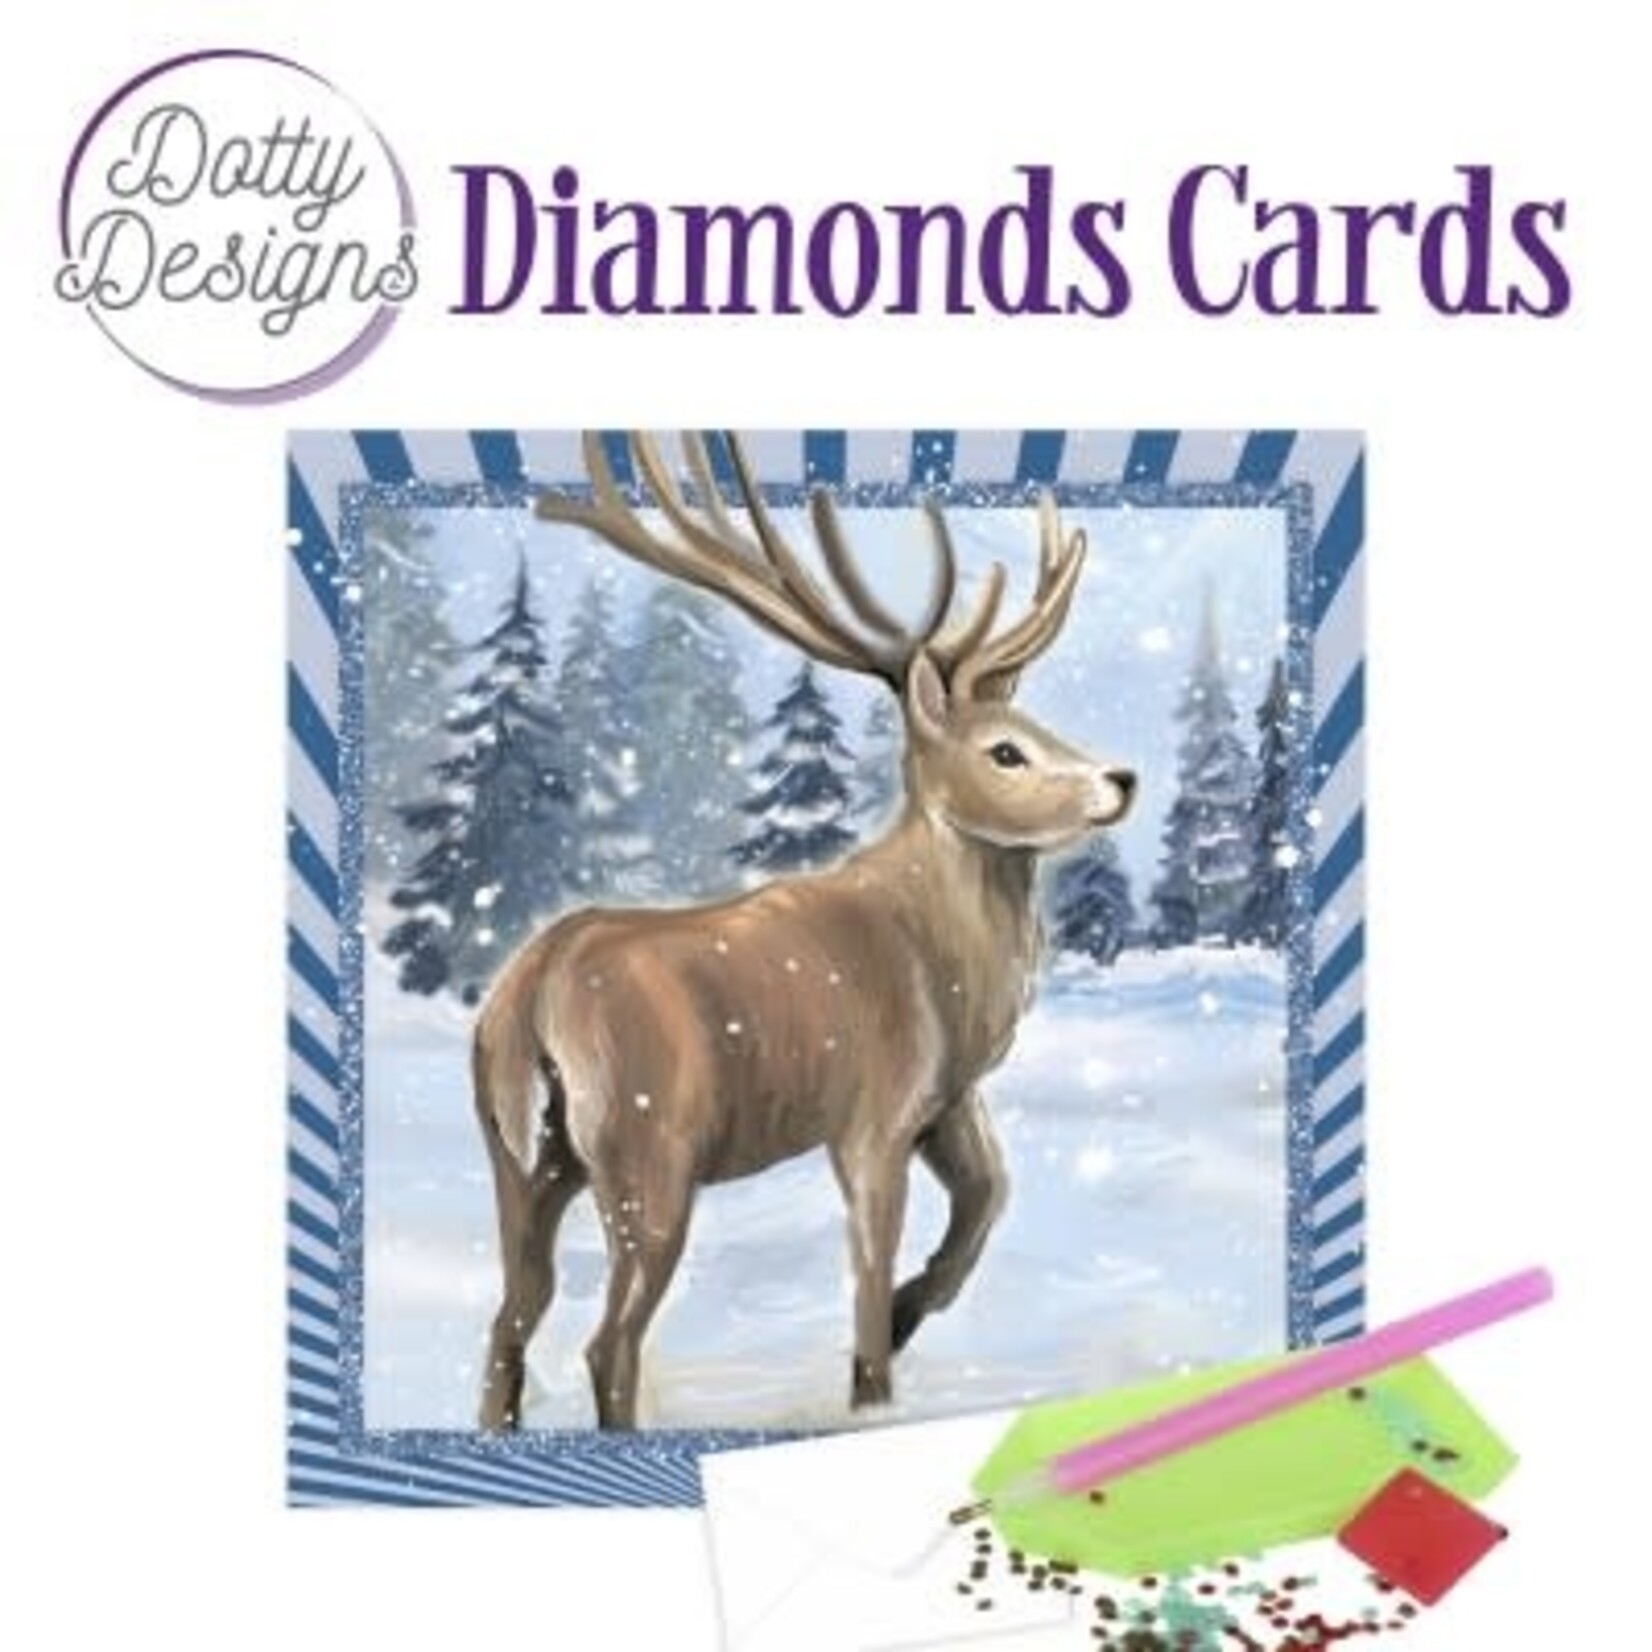 Dotty Designs Dotty Designs Diamond Cards - Reindeer In The Snow